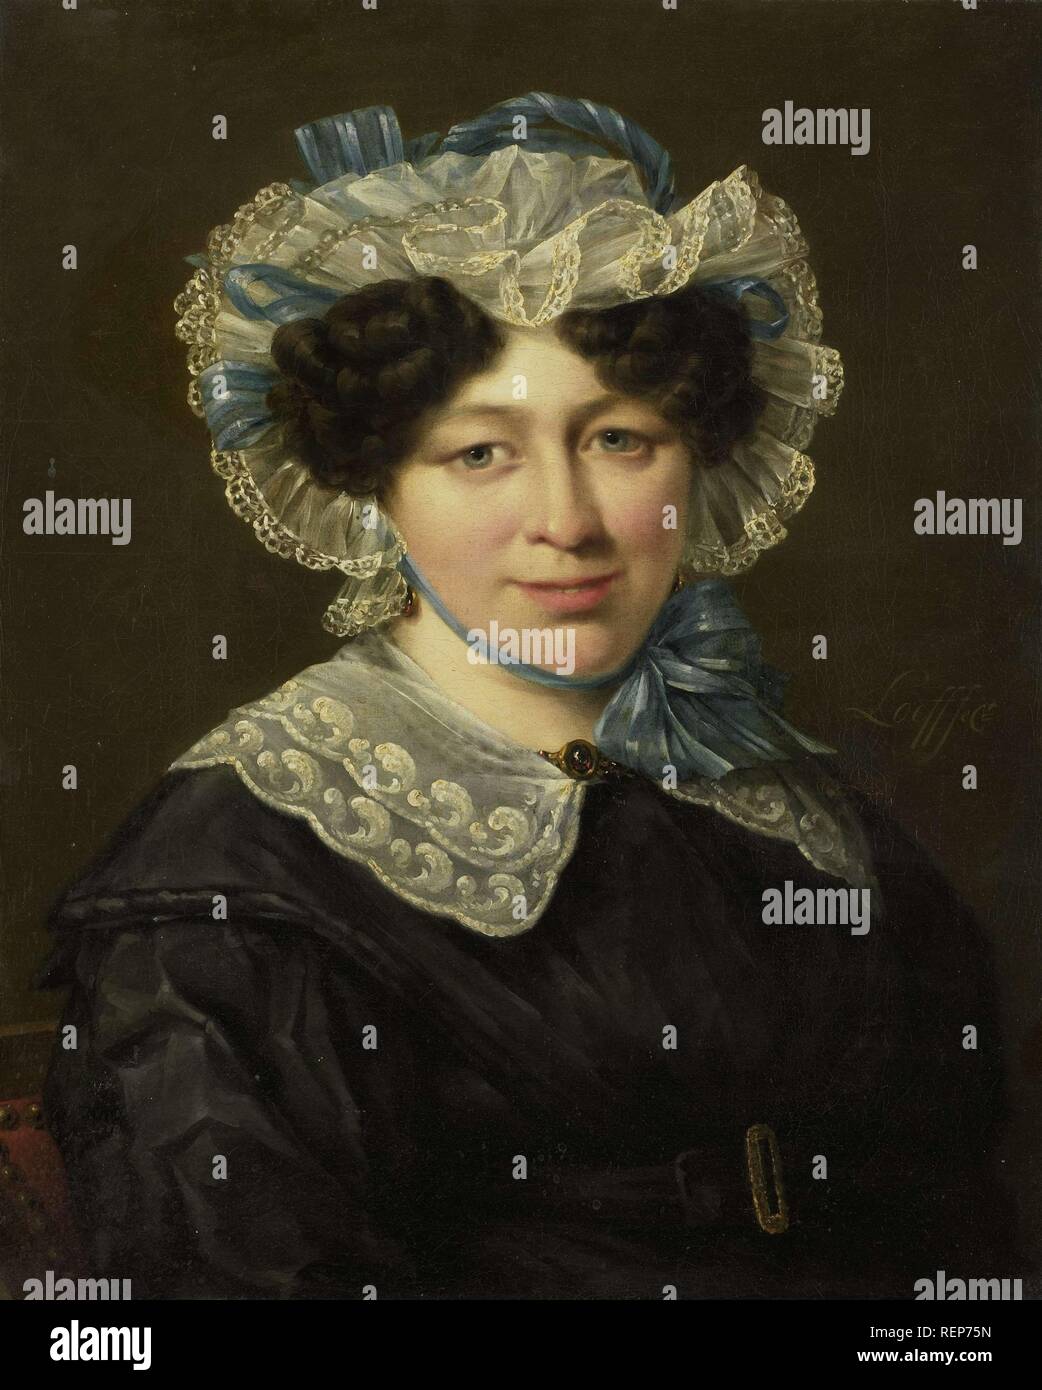 Portrait of Maria Adriana van der Sluys, Wife of Hermanus Martinus Eekhout. Dating: 1830 - 1838. Measurements: h 61.7 cm × w 50.2 cm × t 3.8 cm; d 9.1 cm. Museum: Rijksmuseum, Amsterdam. Author: Hillebrand Dirk Loeff. Stock Photo